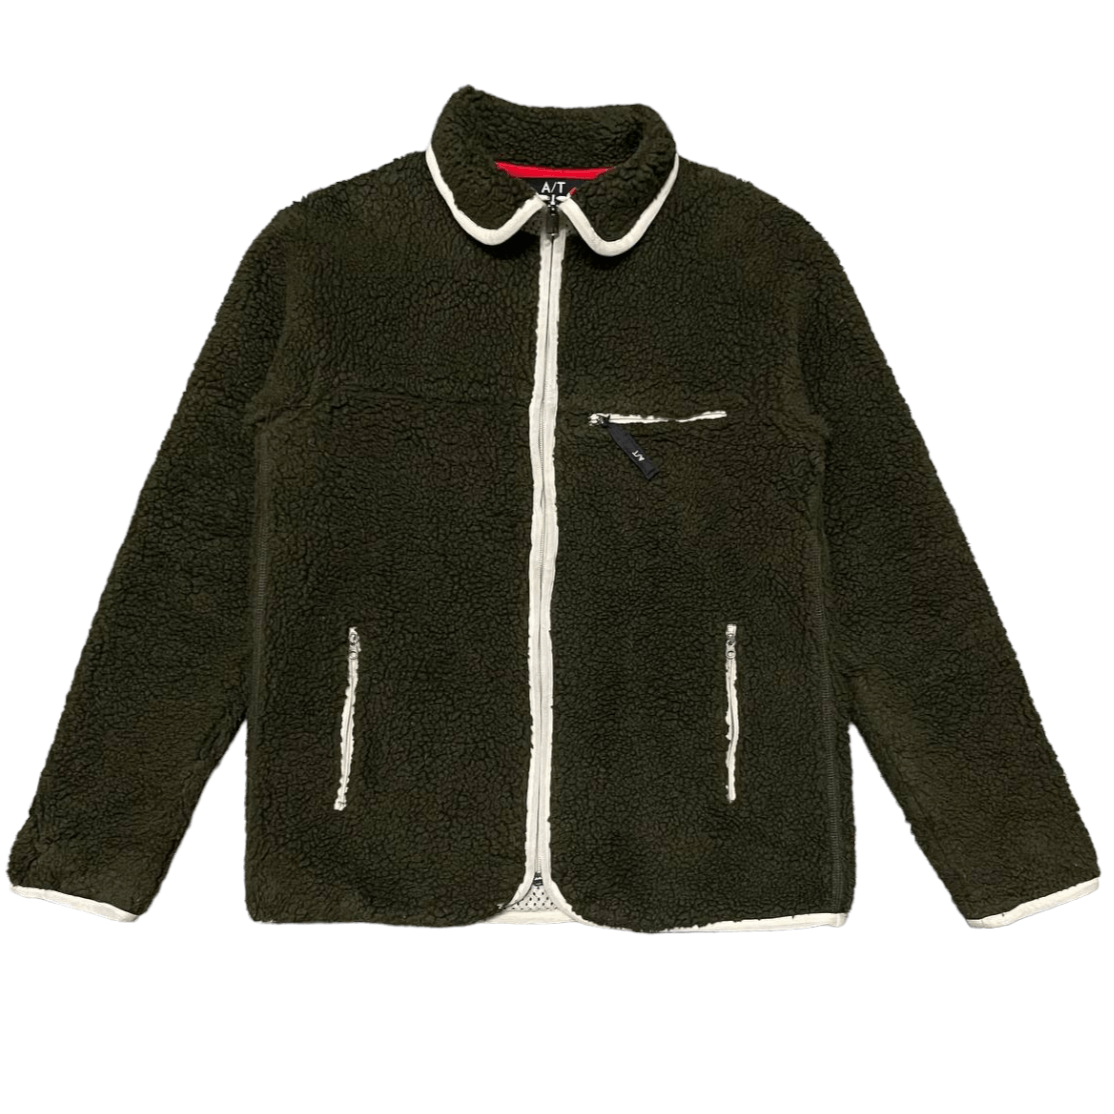 A/T Atsuro Tayama Pile Poil Fleece Jacket - 1